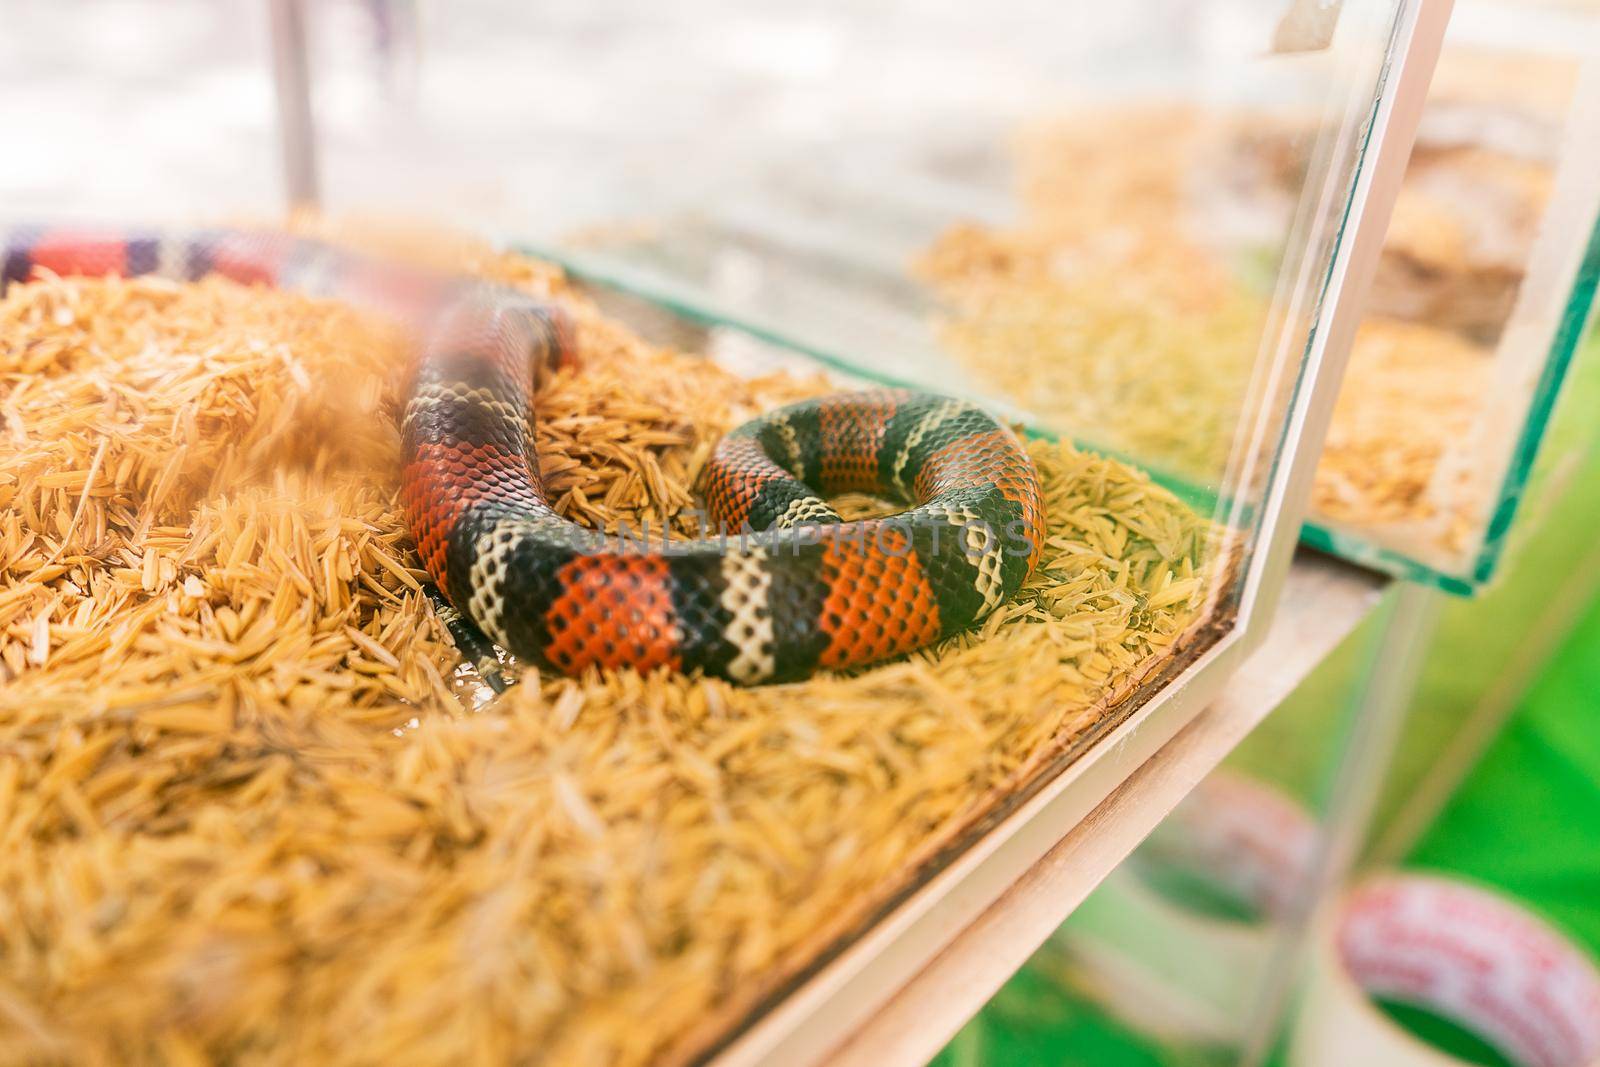 Pet false coral snake in a glass tank by cfalvarez